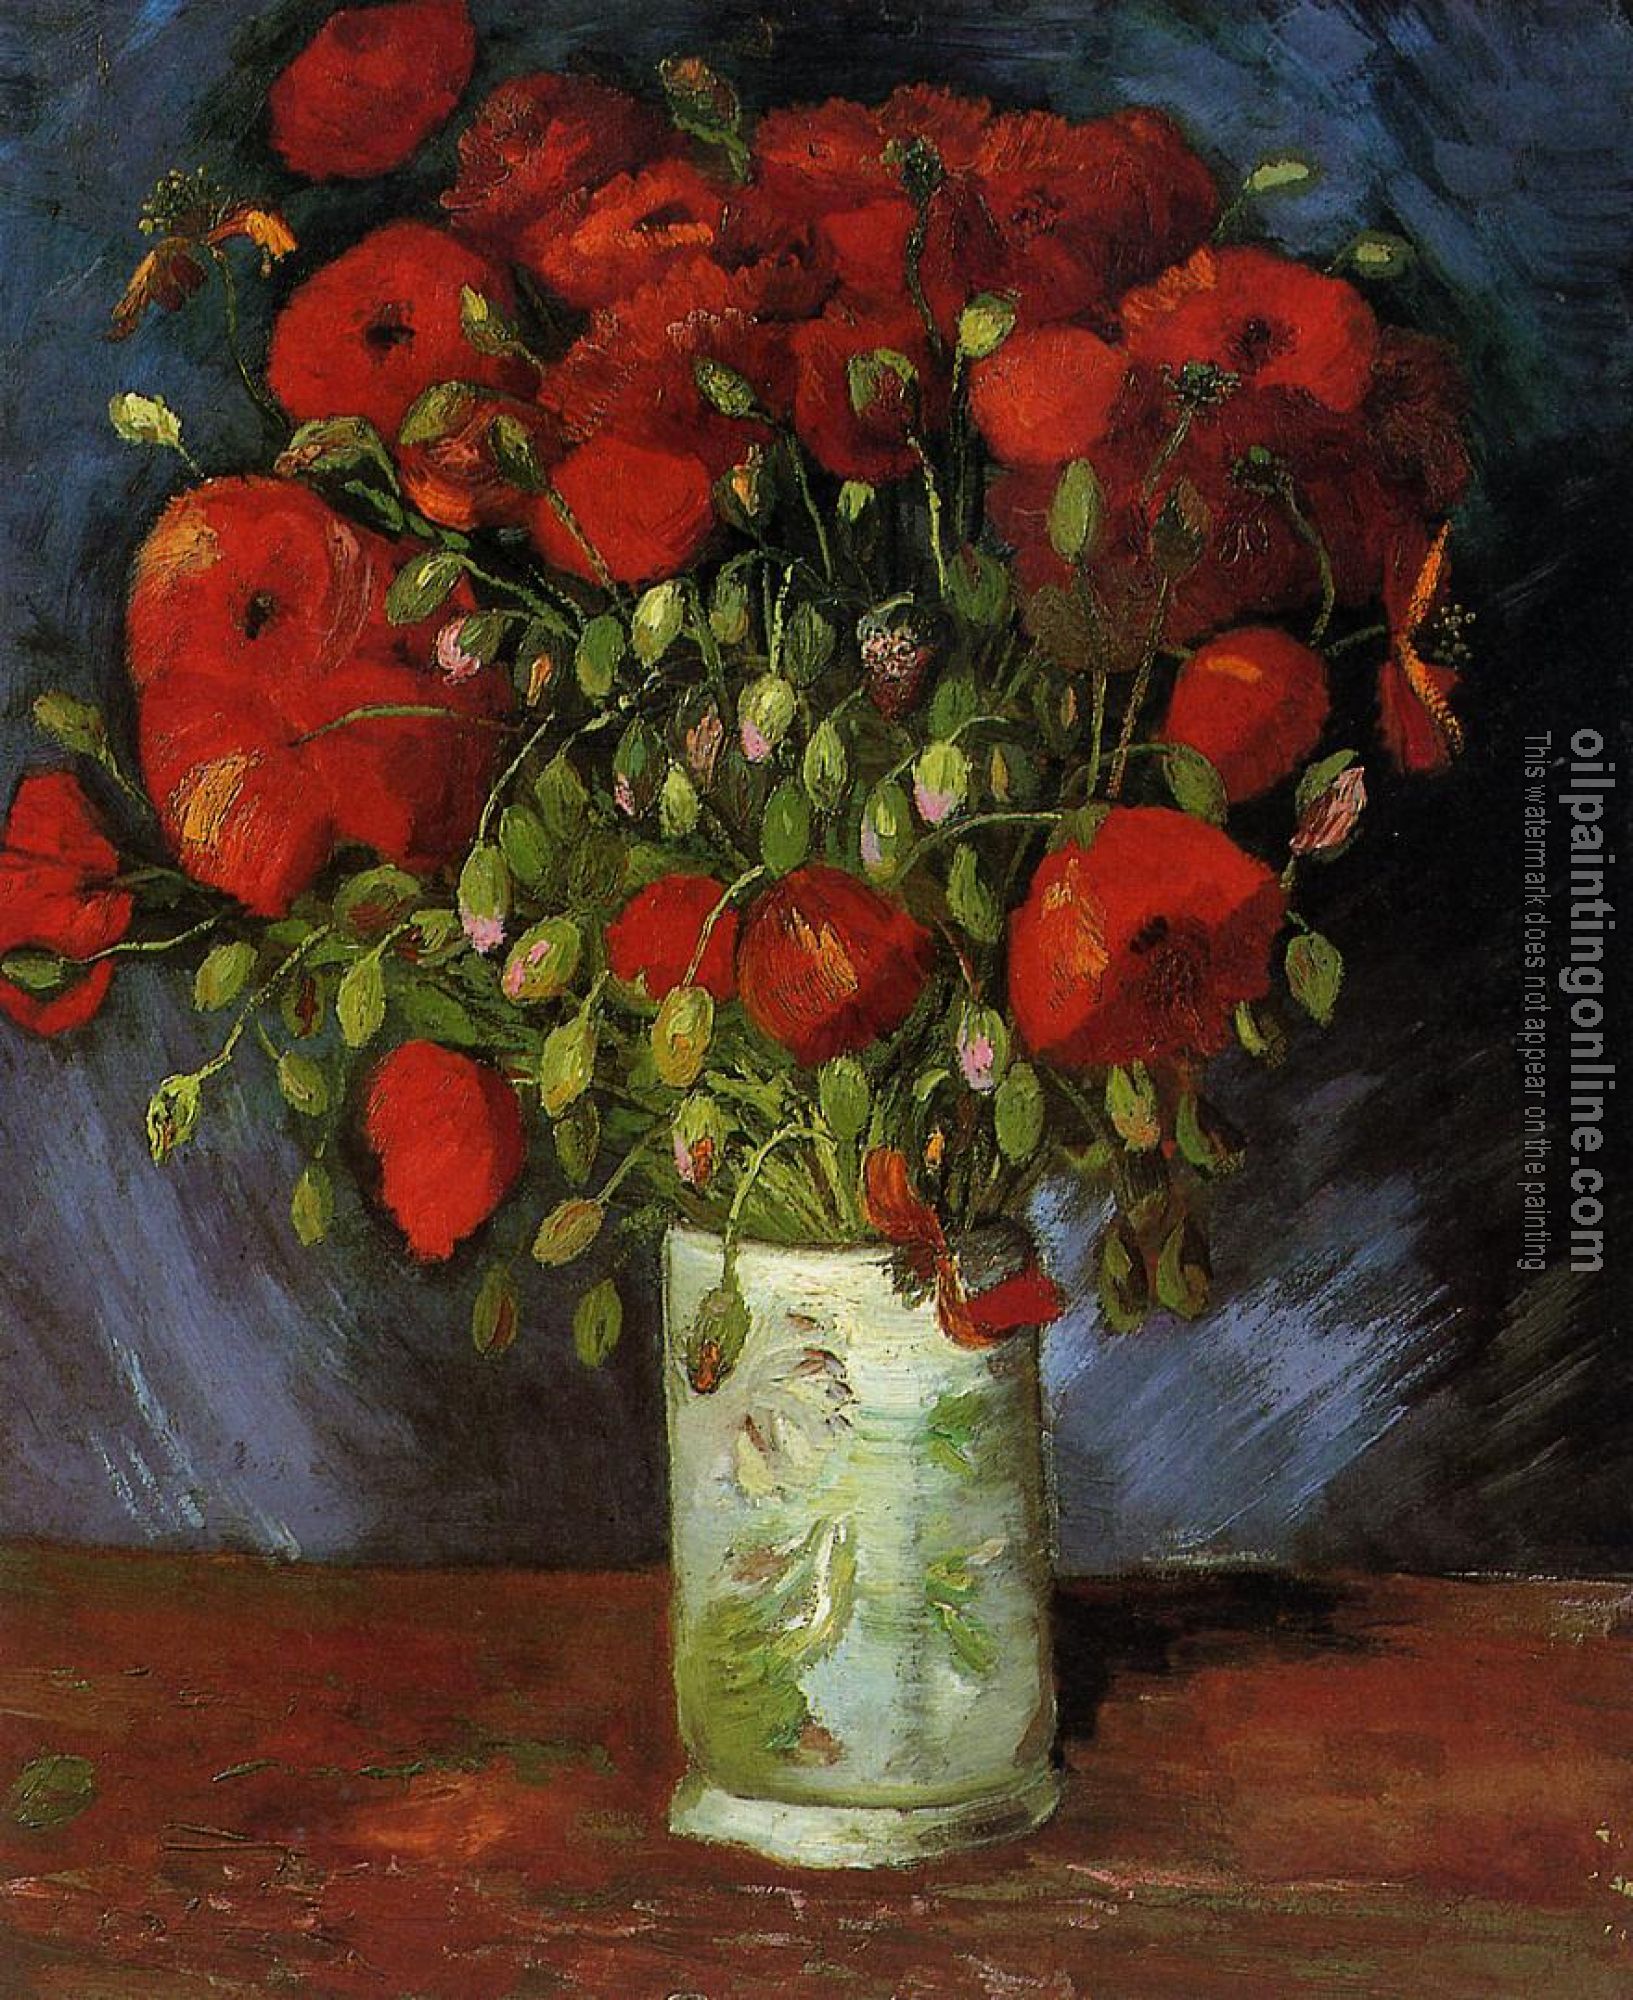 Gogh, Vincent van - Vase with Red Poppies